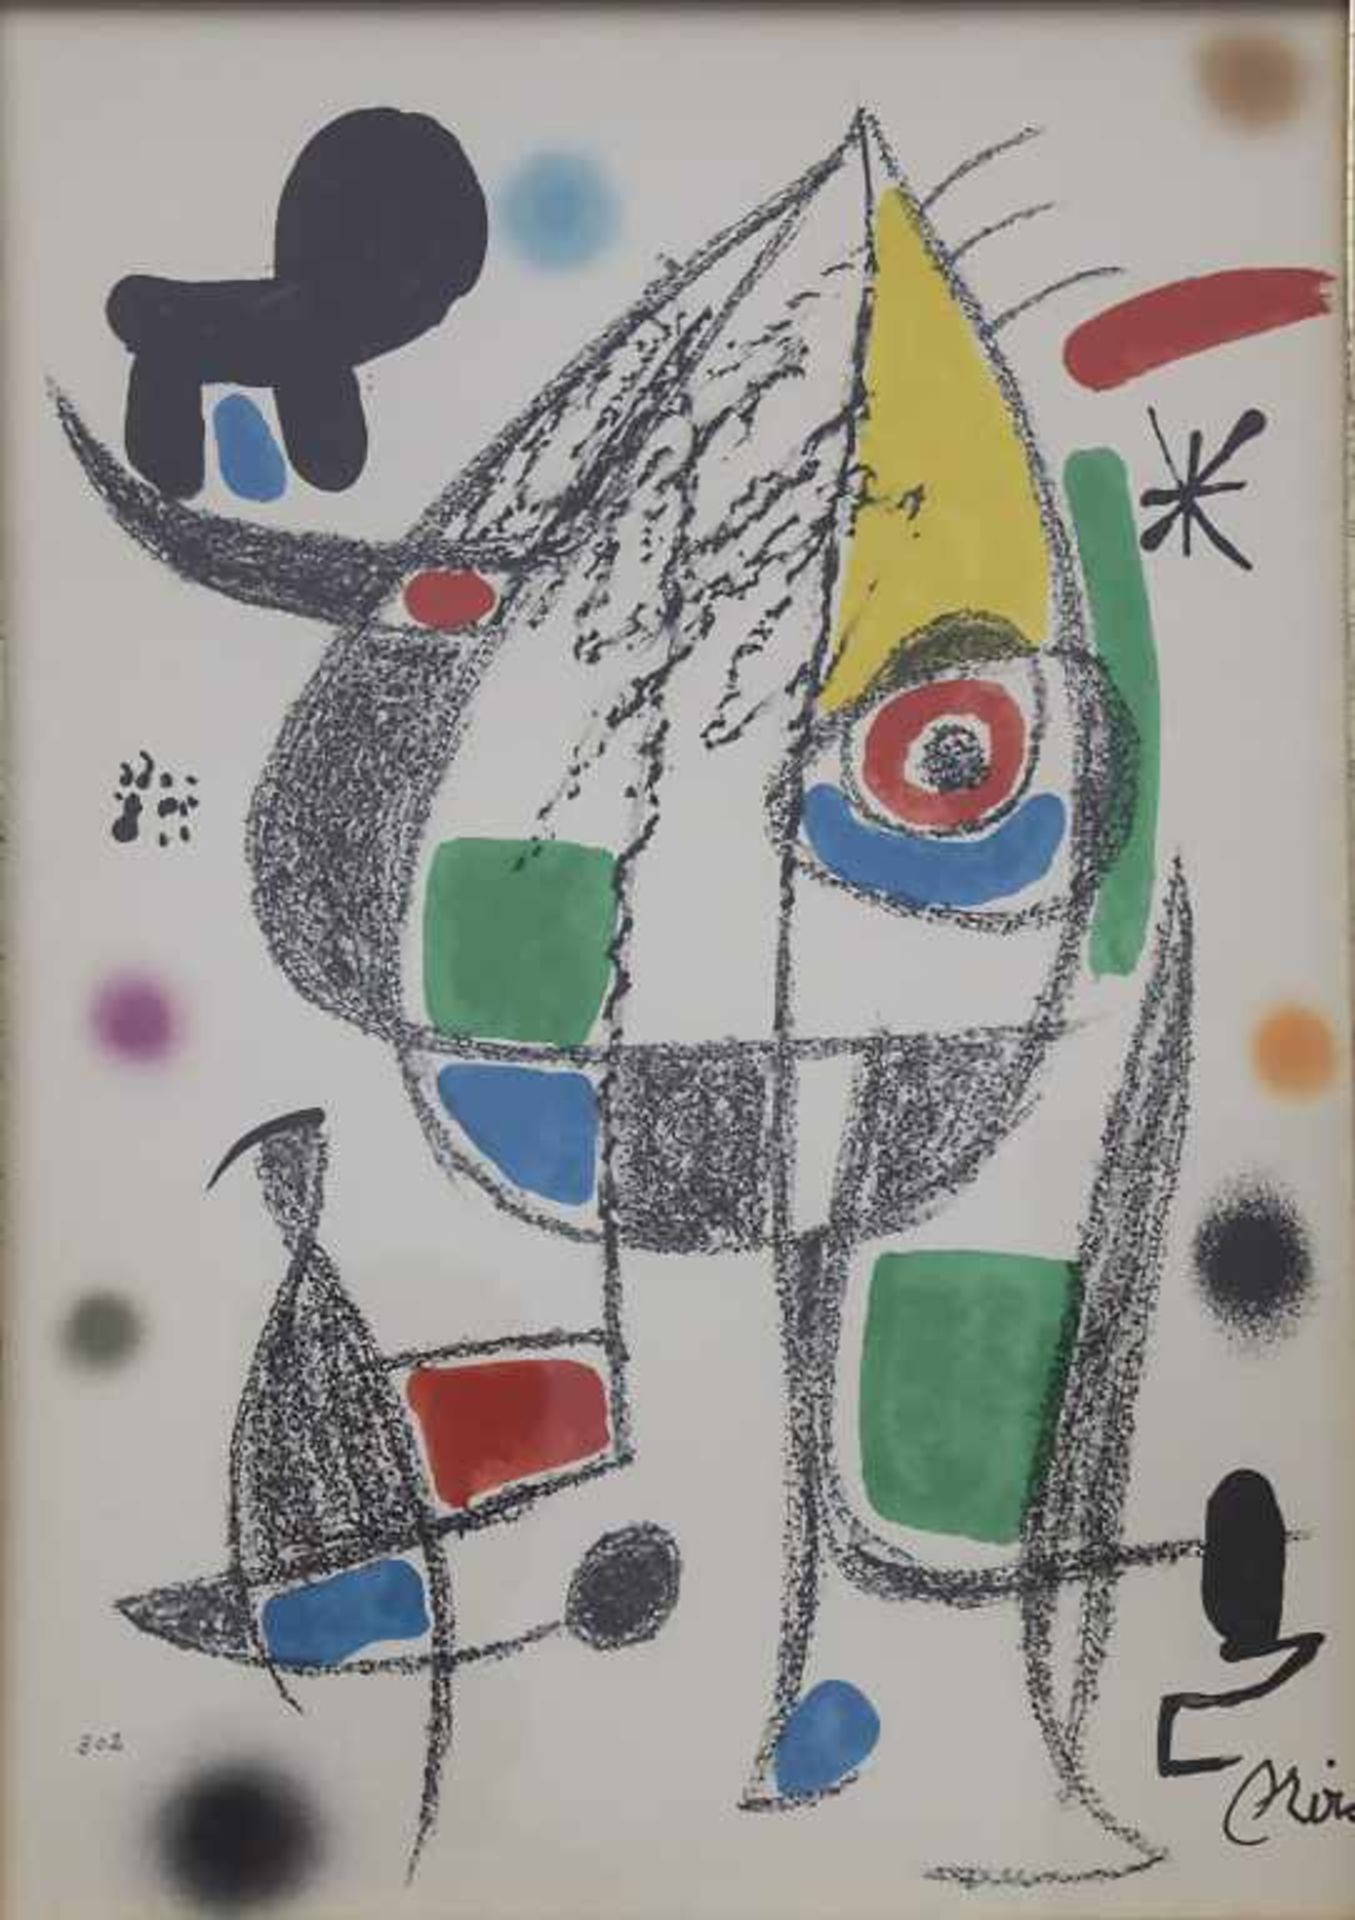 Joan Miro (1893-1983), 'Maravillas con variaciones' Technik: Farblithografie auf Papier,